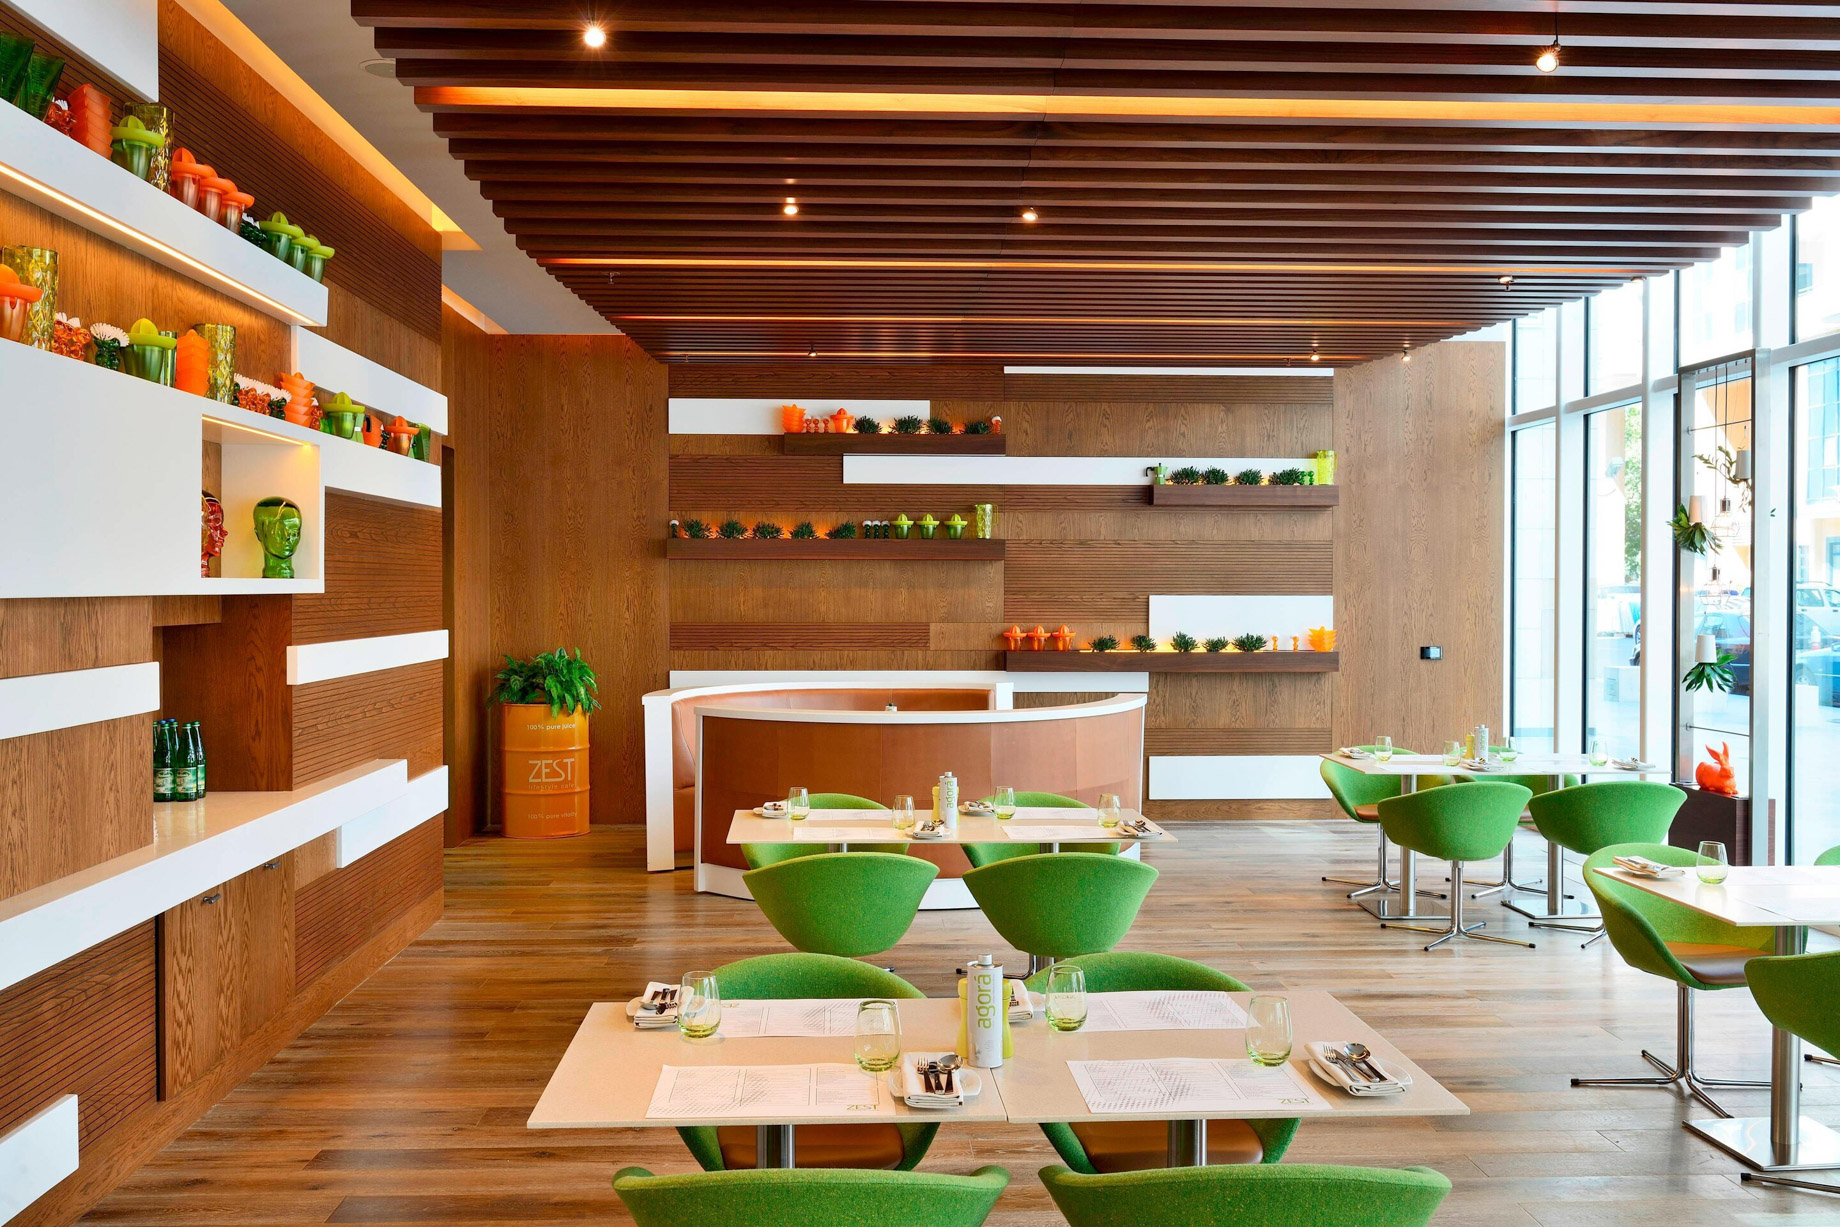 JW Marriott Absheron Baku Hotel – Baku, Azerbaijan – ZEST Lifestyle Cafe Dining Tables